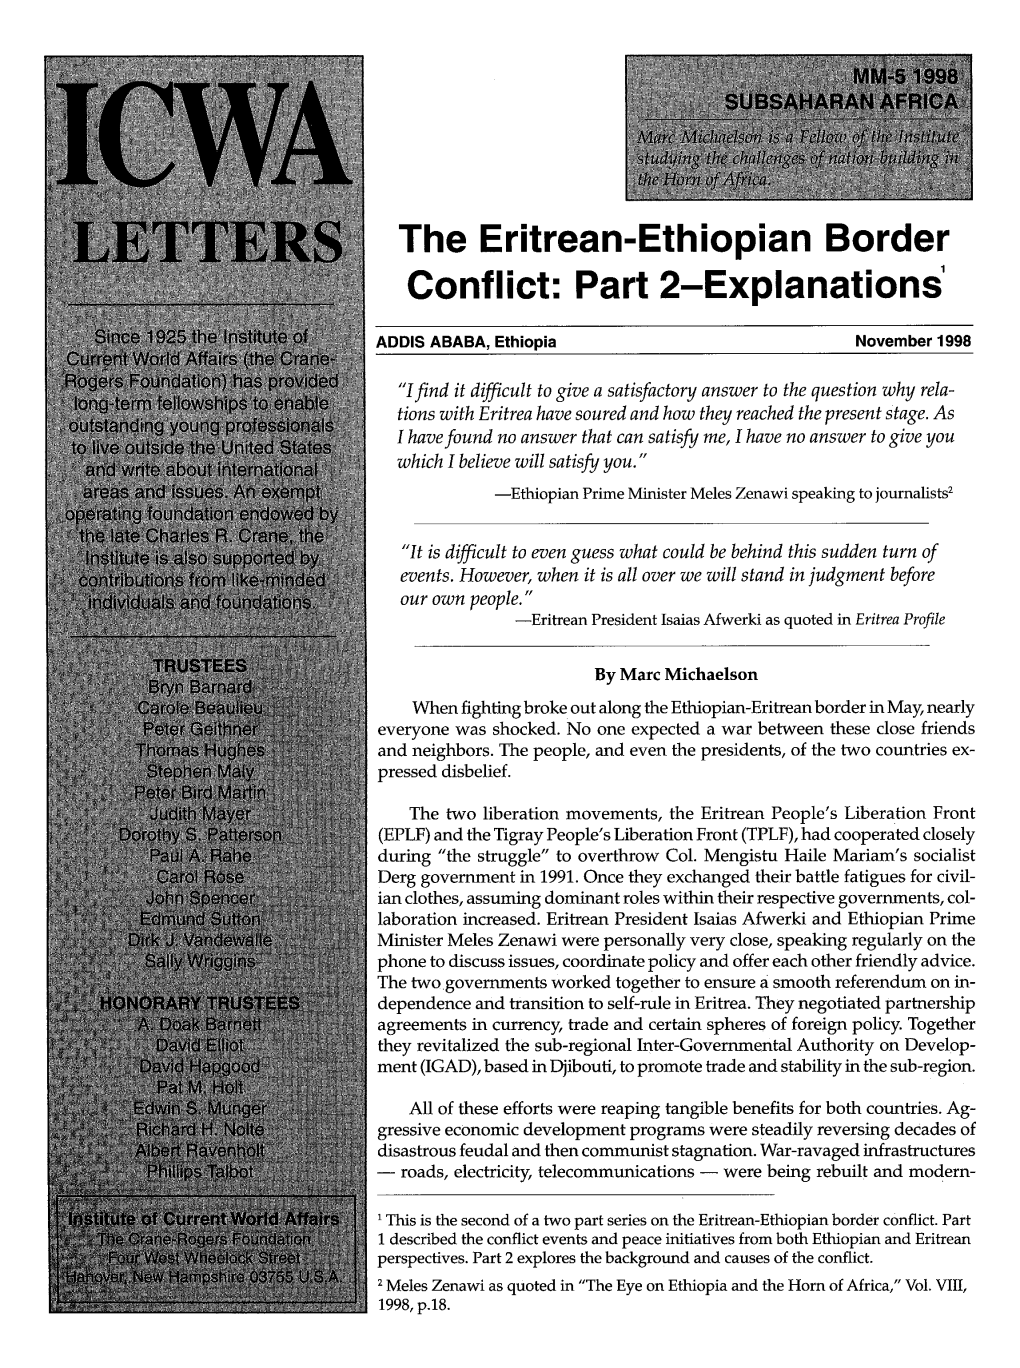 The Eritrean-Ethiopian Border Conflict: Part 2-Explanations